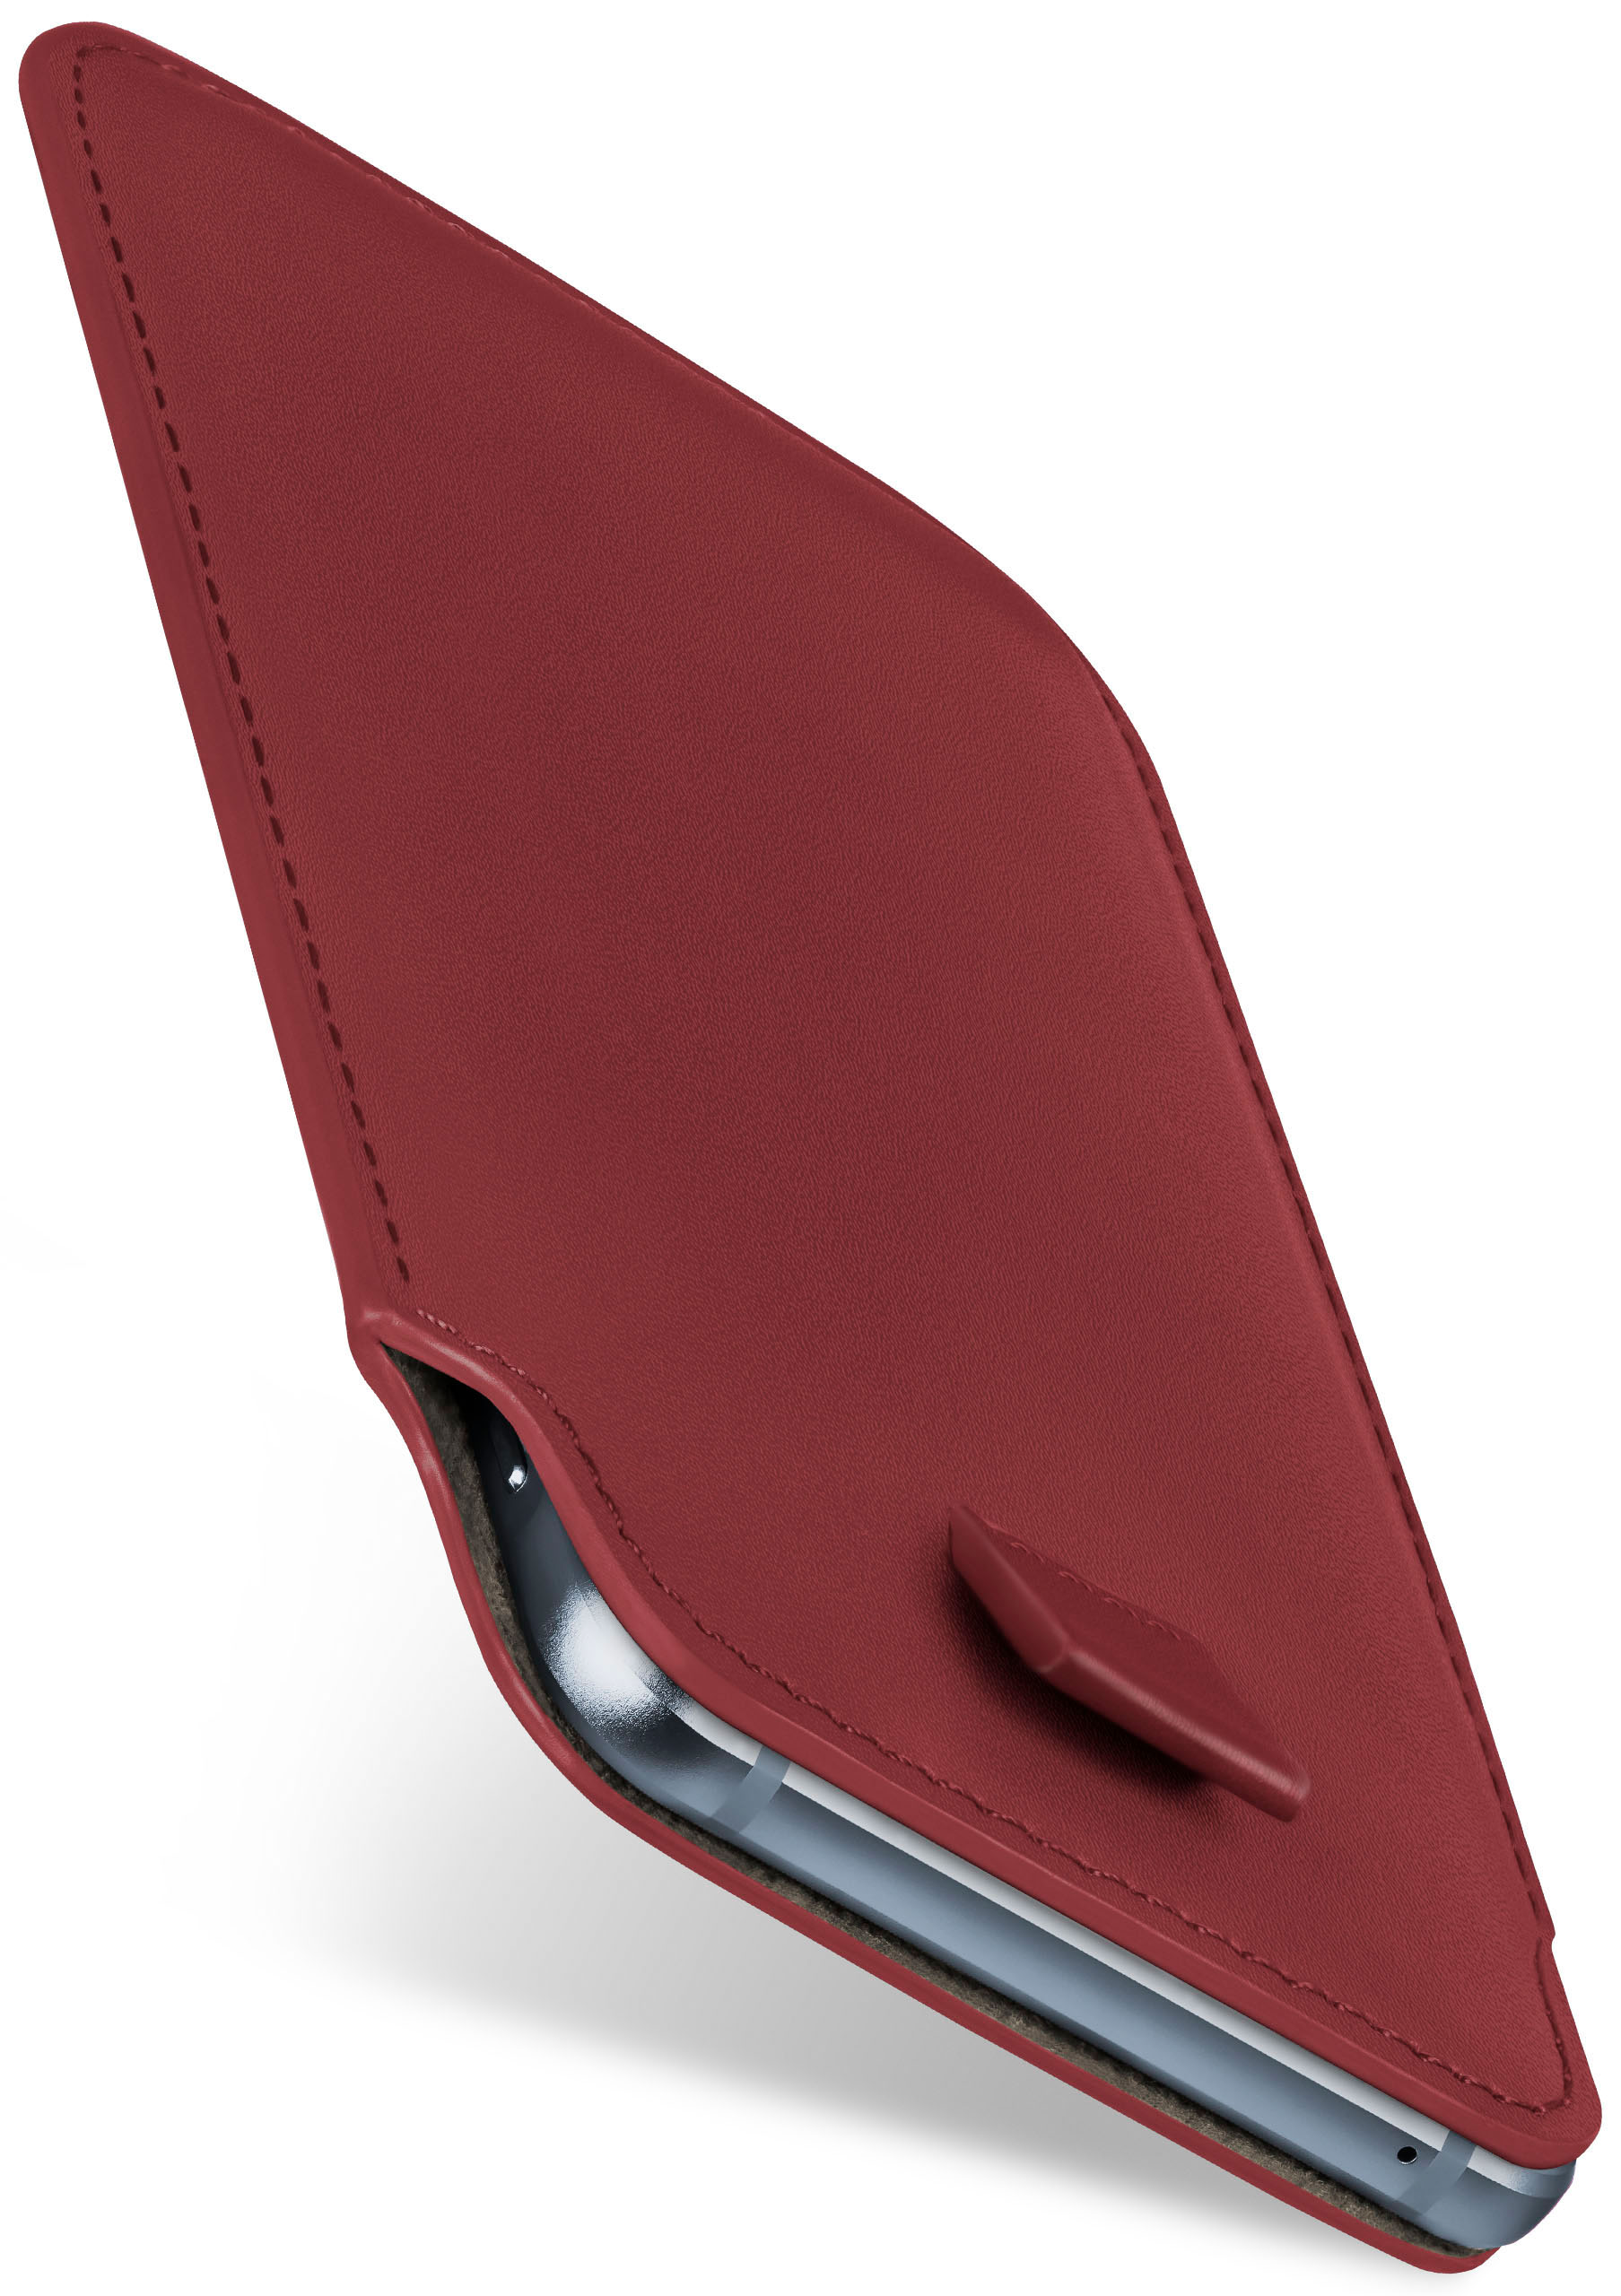 MOEX Slide Case, Full Cover, Q7, LG, Maroon-Red